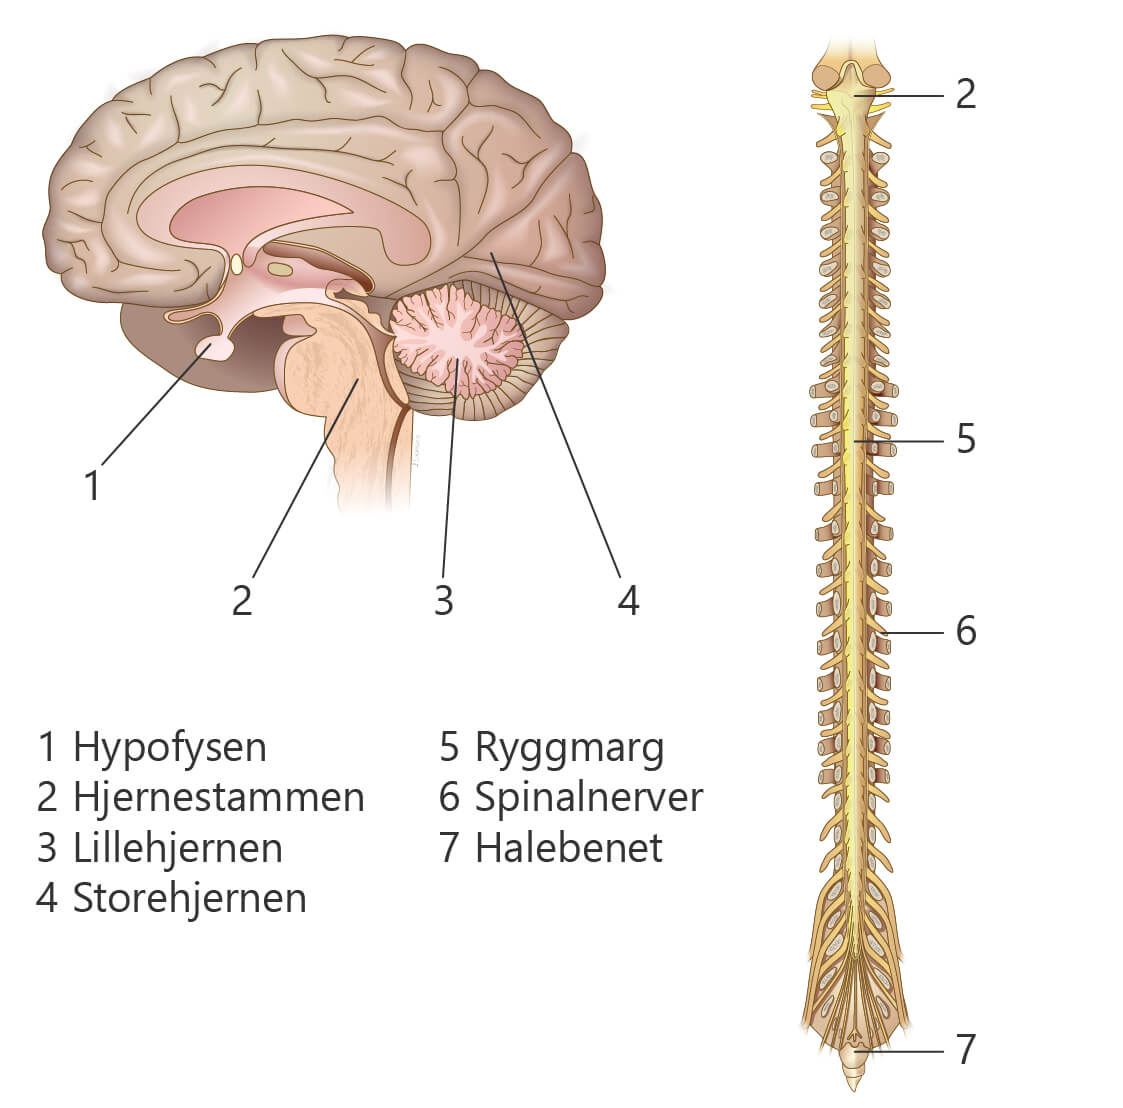 Illustrasjon kreft i sentralnervesystemet: Hjerne, rygg, sentralnervesystem, hjernestamme, hypofyse, lillehjernen, storehjernen, ryggmarg, spinalnerver, haleben. Kreftlex.no @Jostein Eikanger